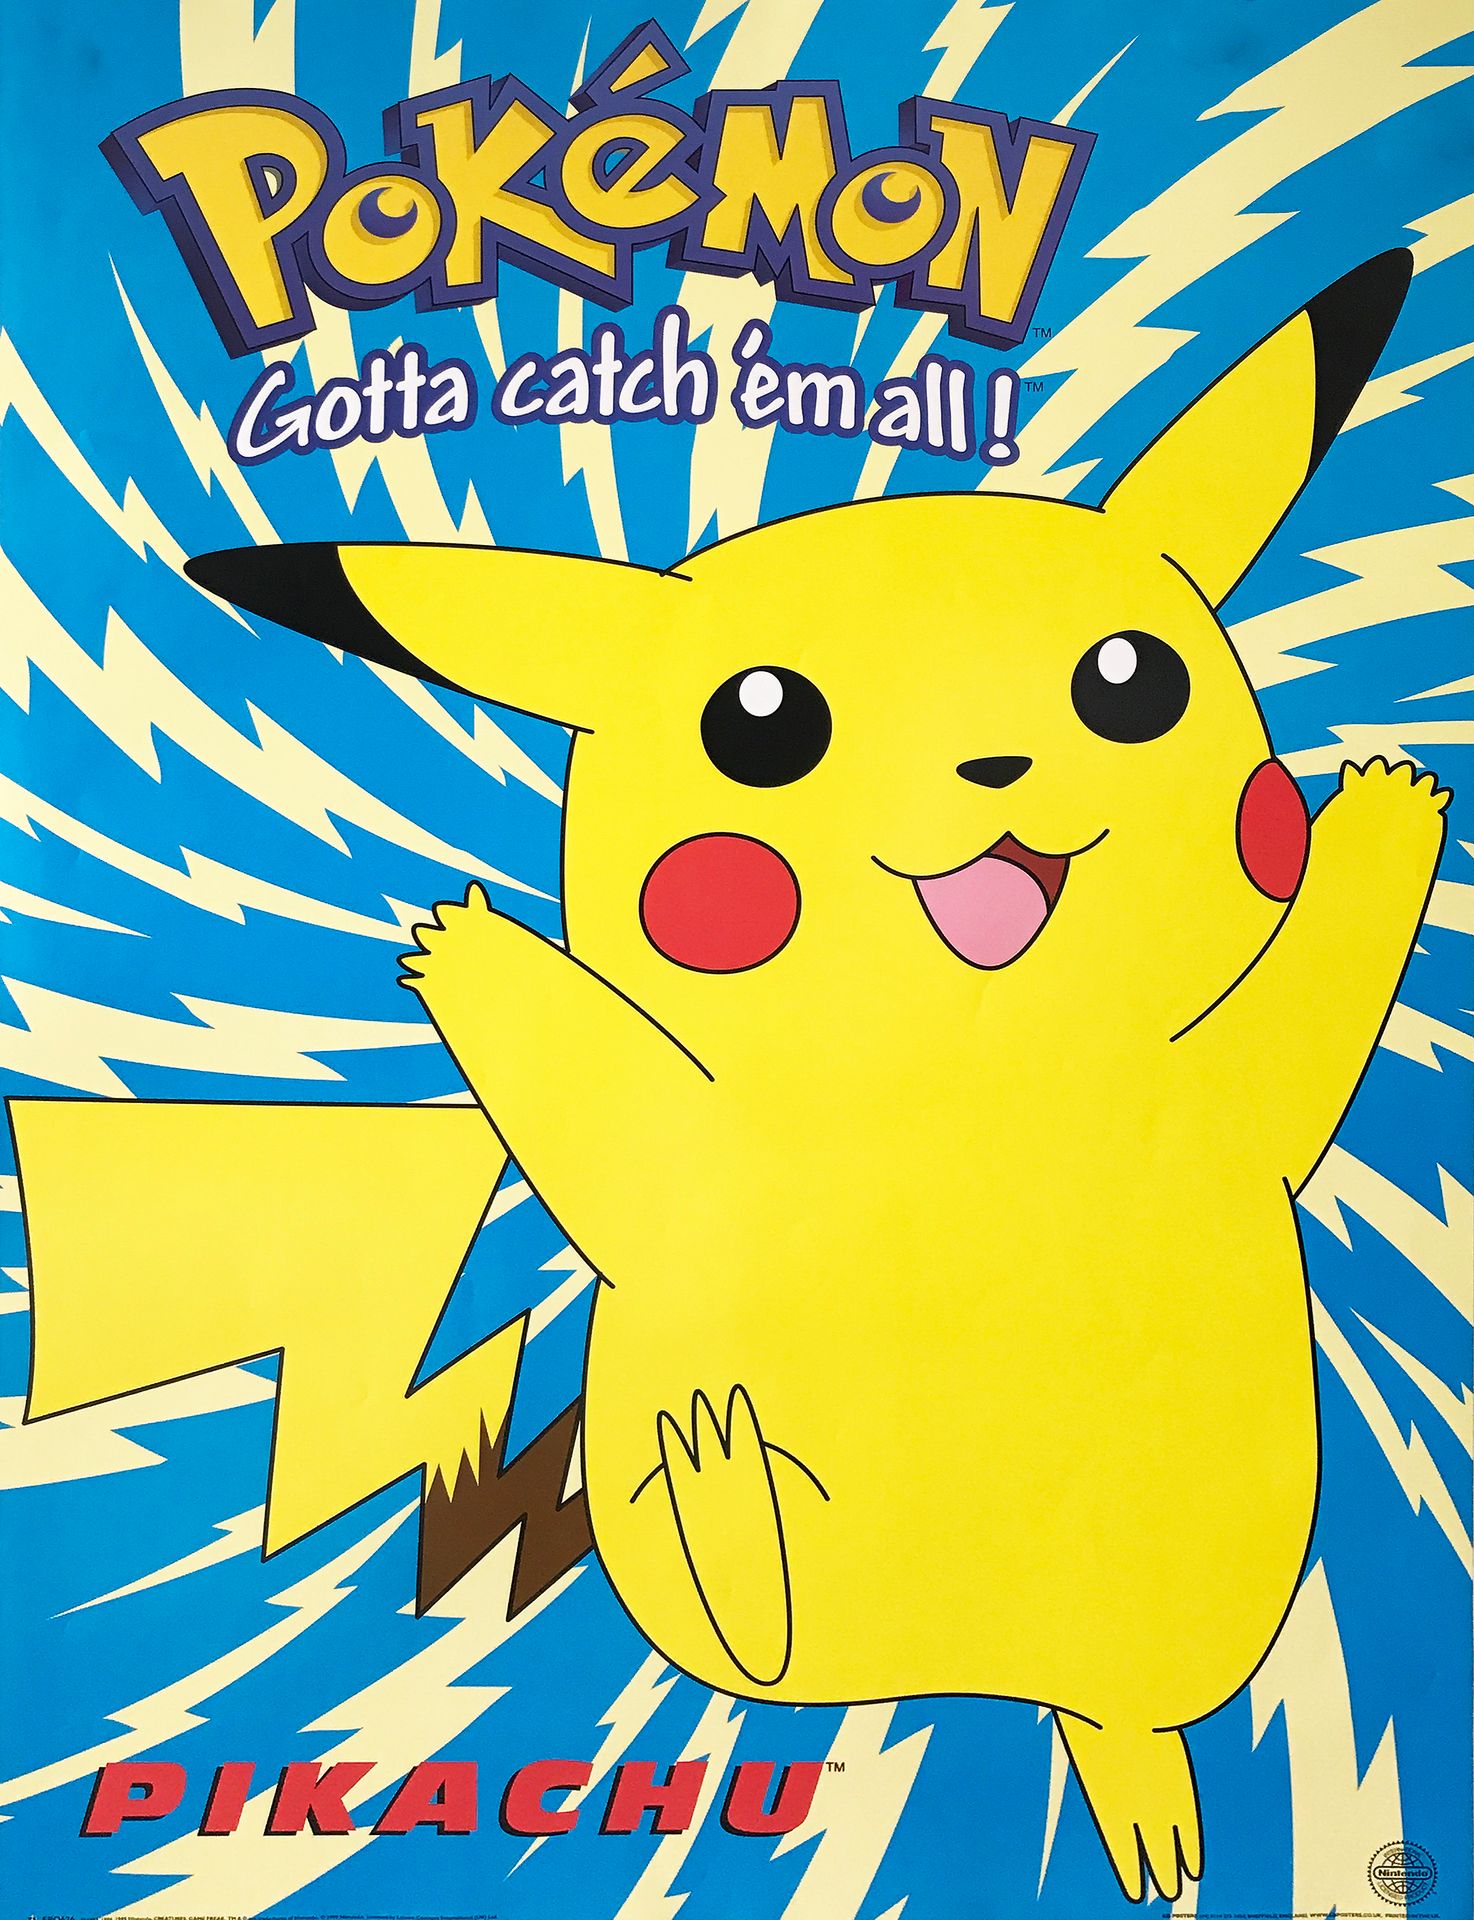 Null 
POKÉMON - Pikachu "Gotta catch 'em all
Laminated poster
Nintendo, 1999
GB &hellip;